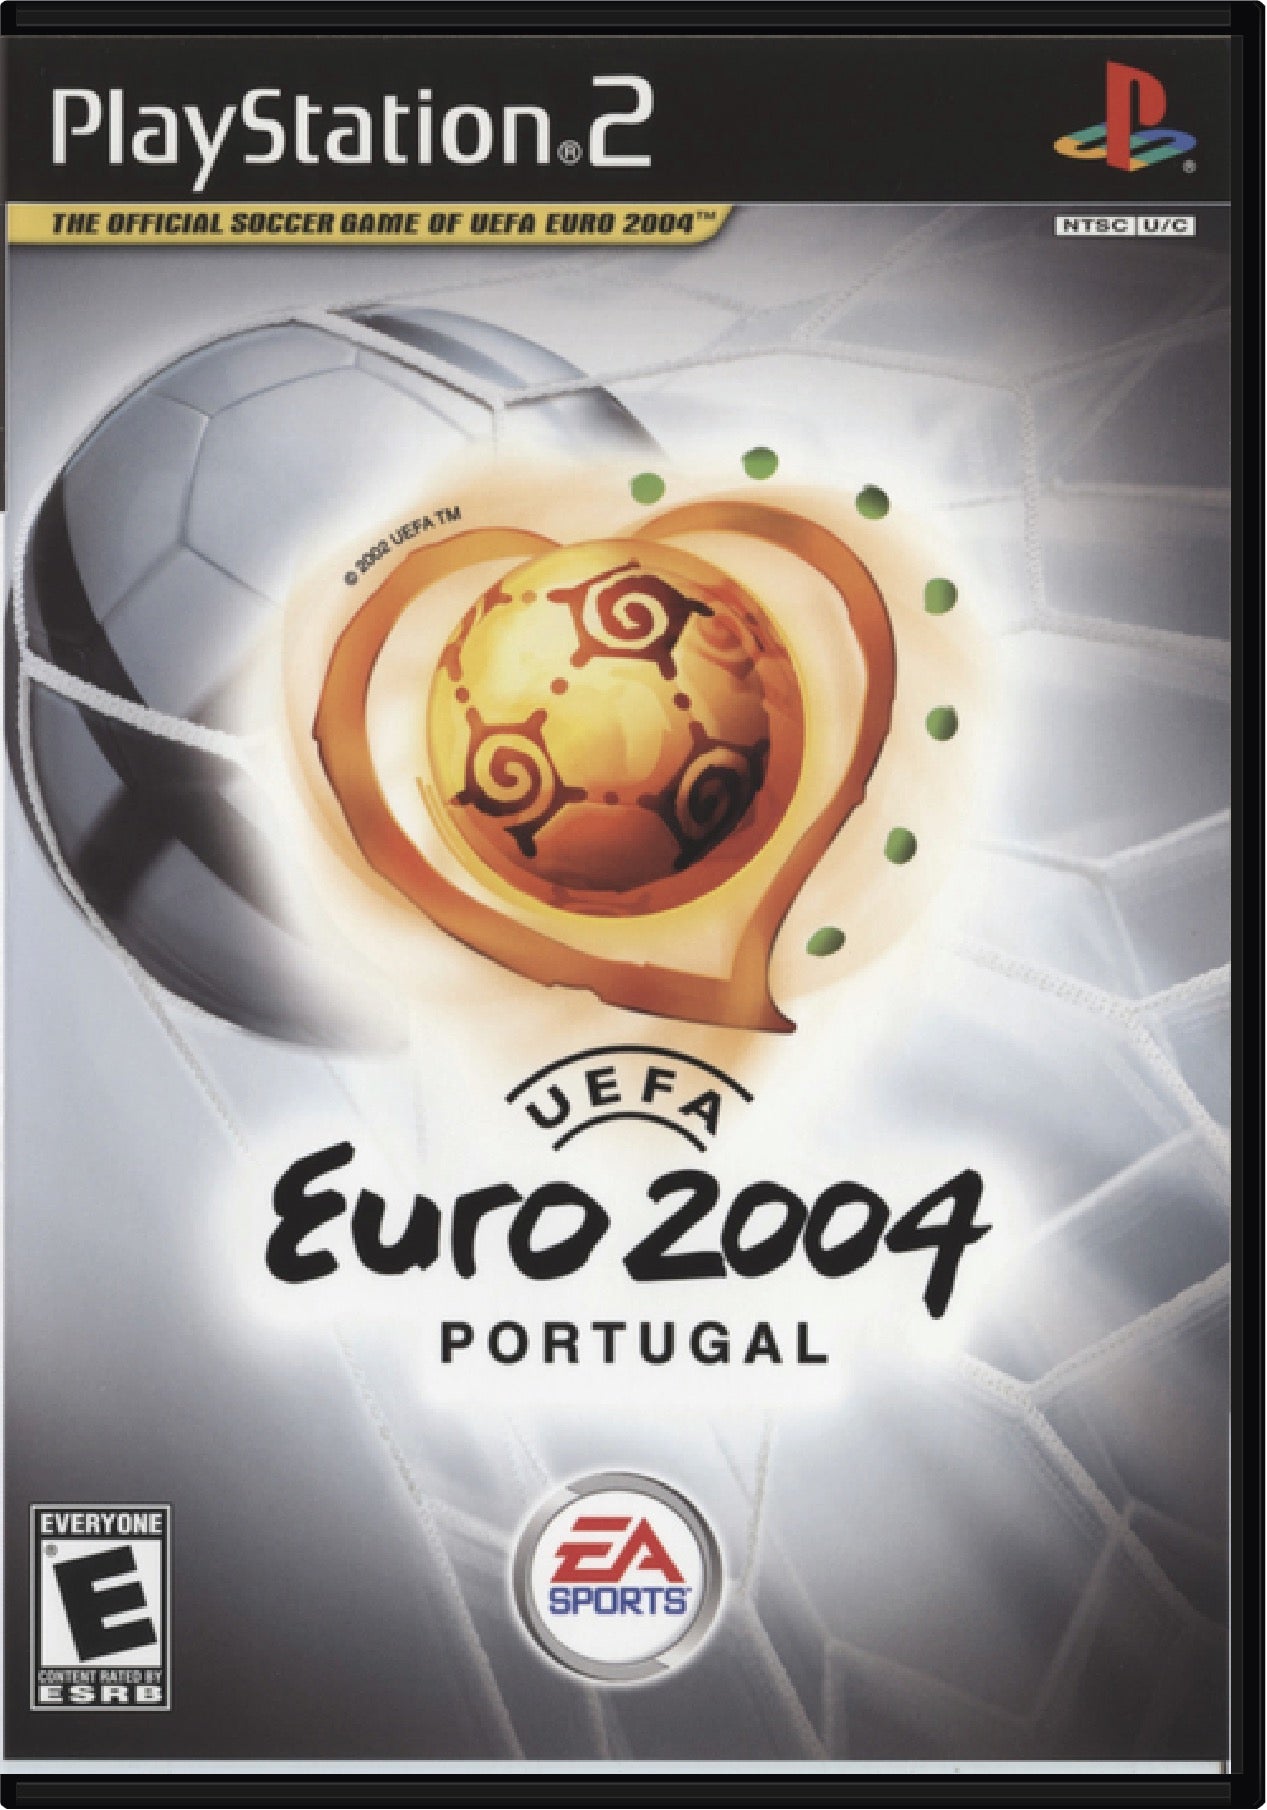 UEFA Euro 2004 Cover Art and Product Photo